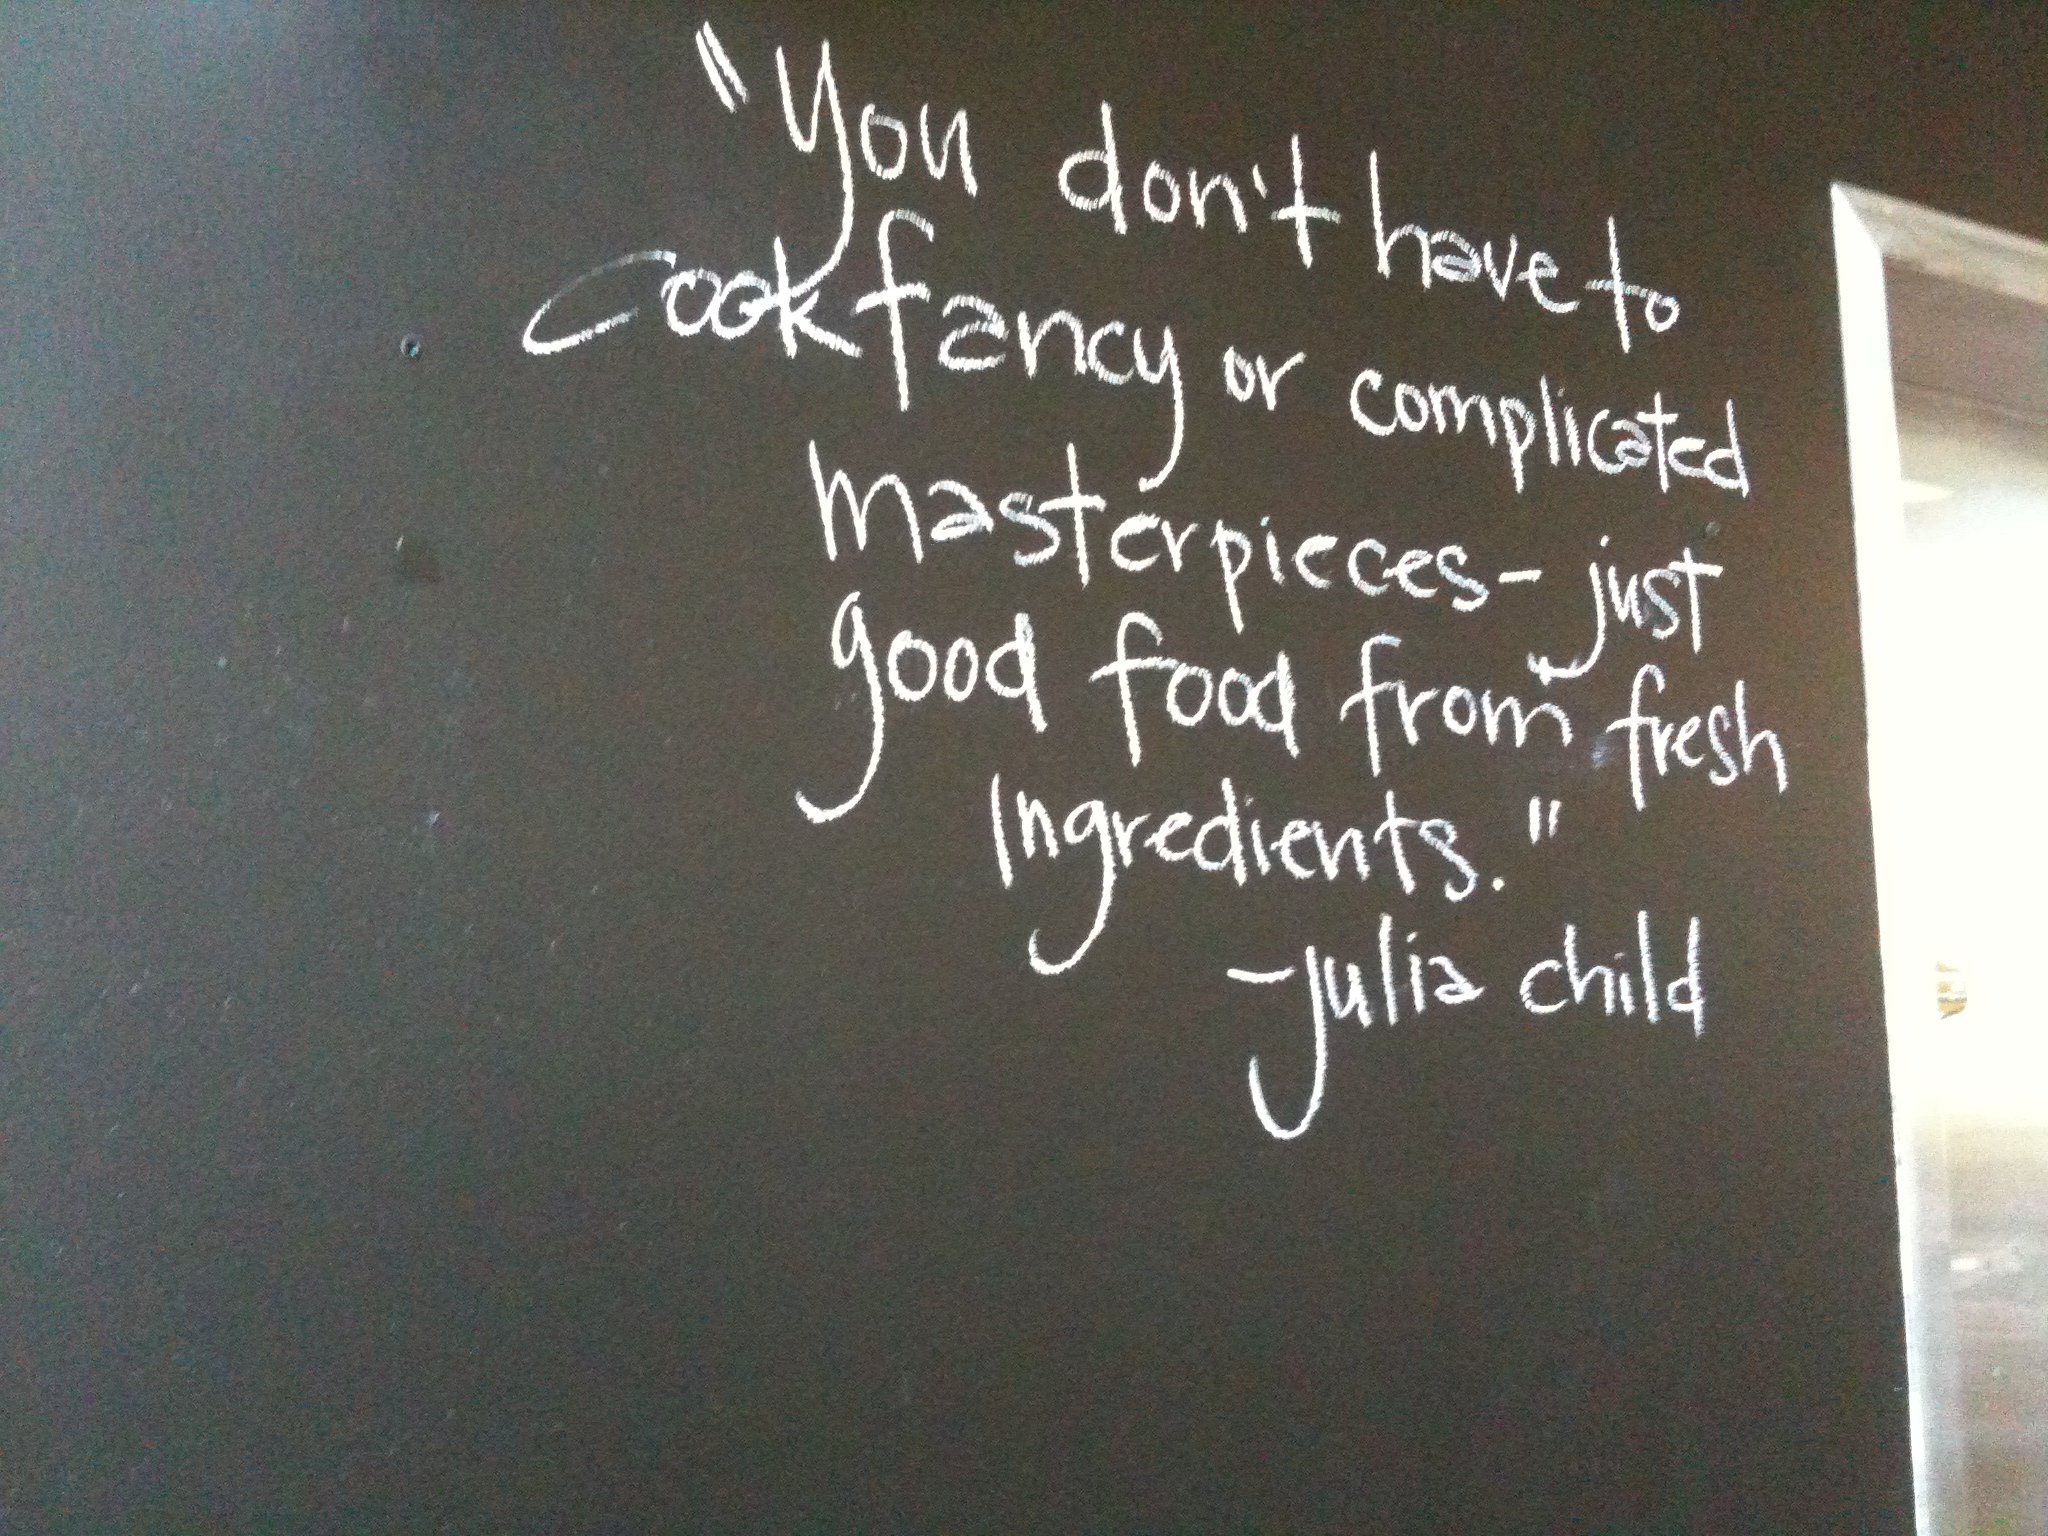 Julia Child Quote from Ballard.JPG